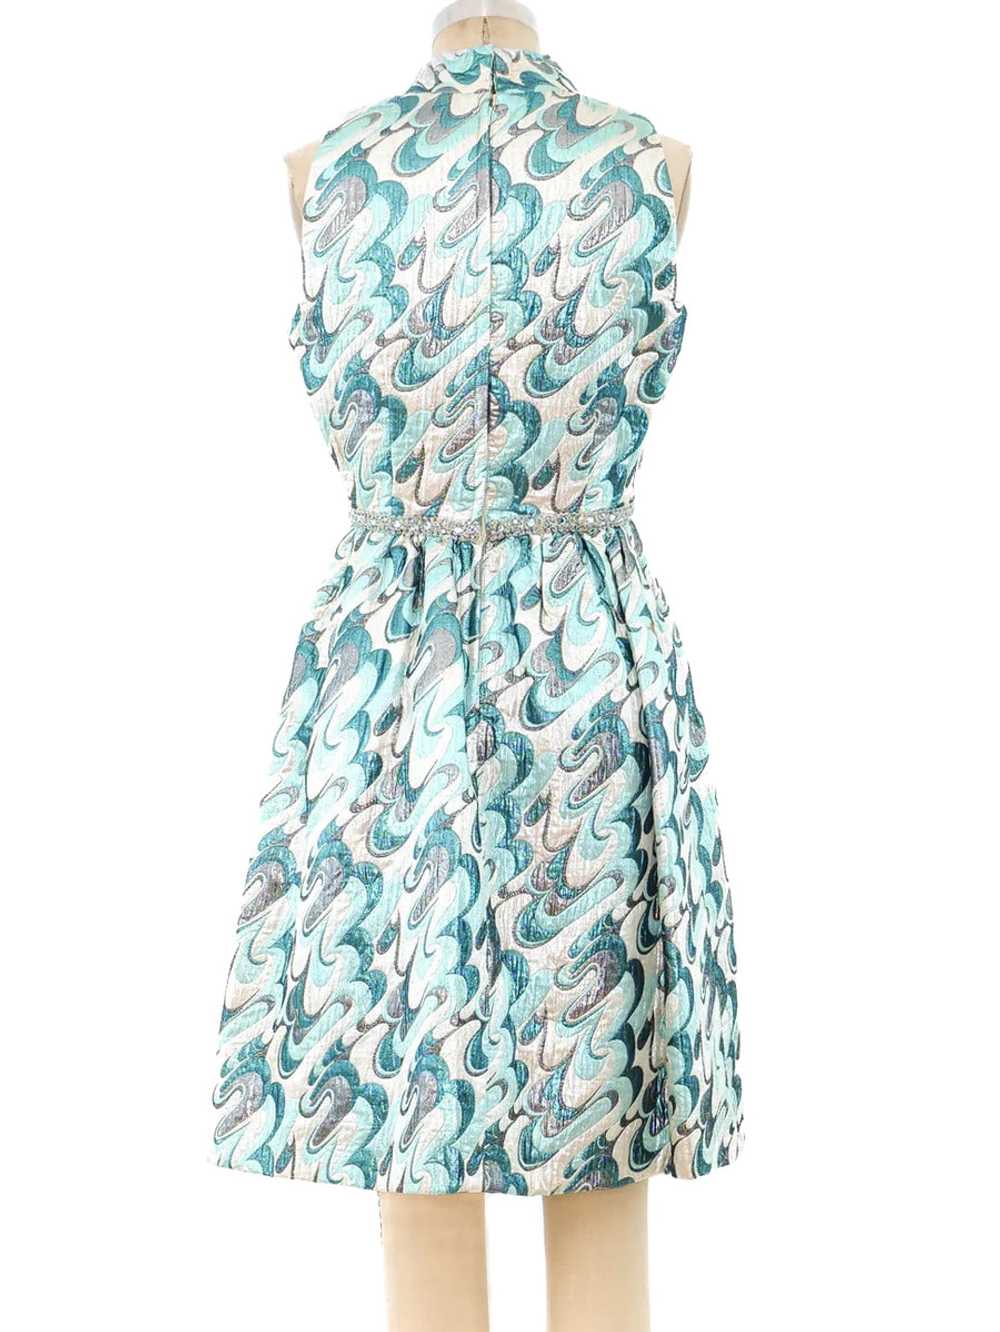 1960's Swirl Brocade Sleeveless Dress - image 4